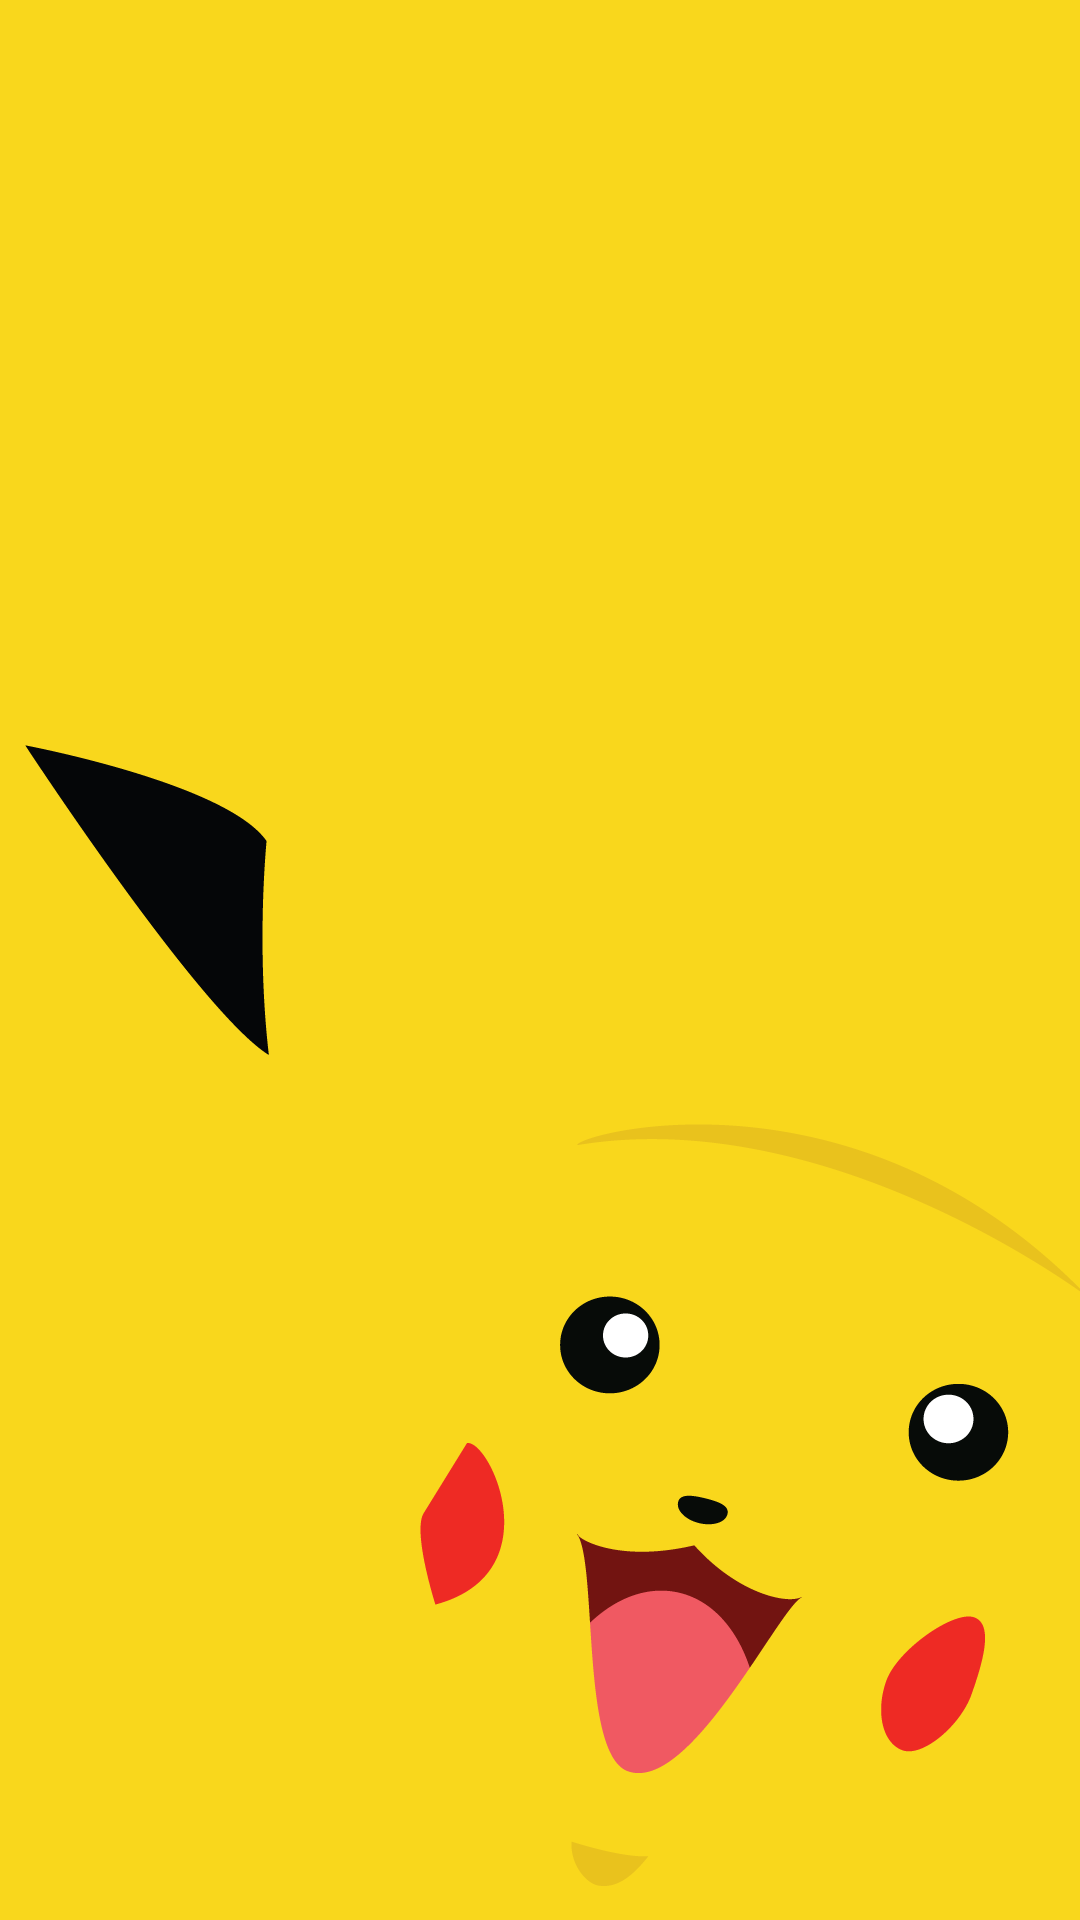 Pokemon Pikachu Art Wallpapers  Pikachu Wallpapers for iPhone